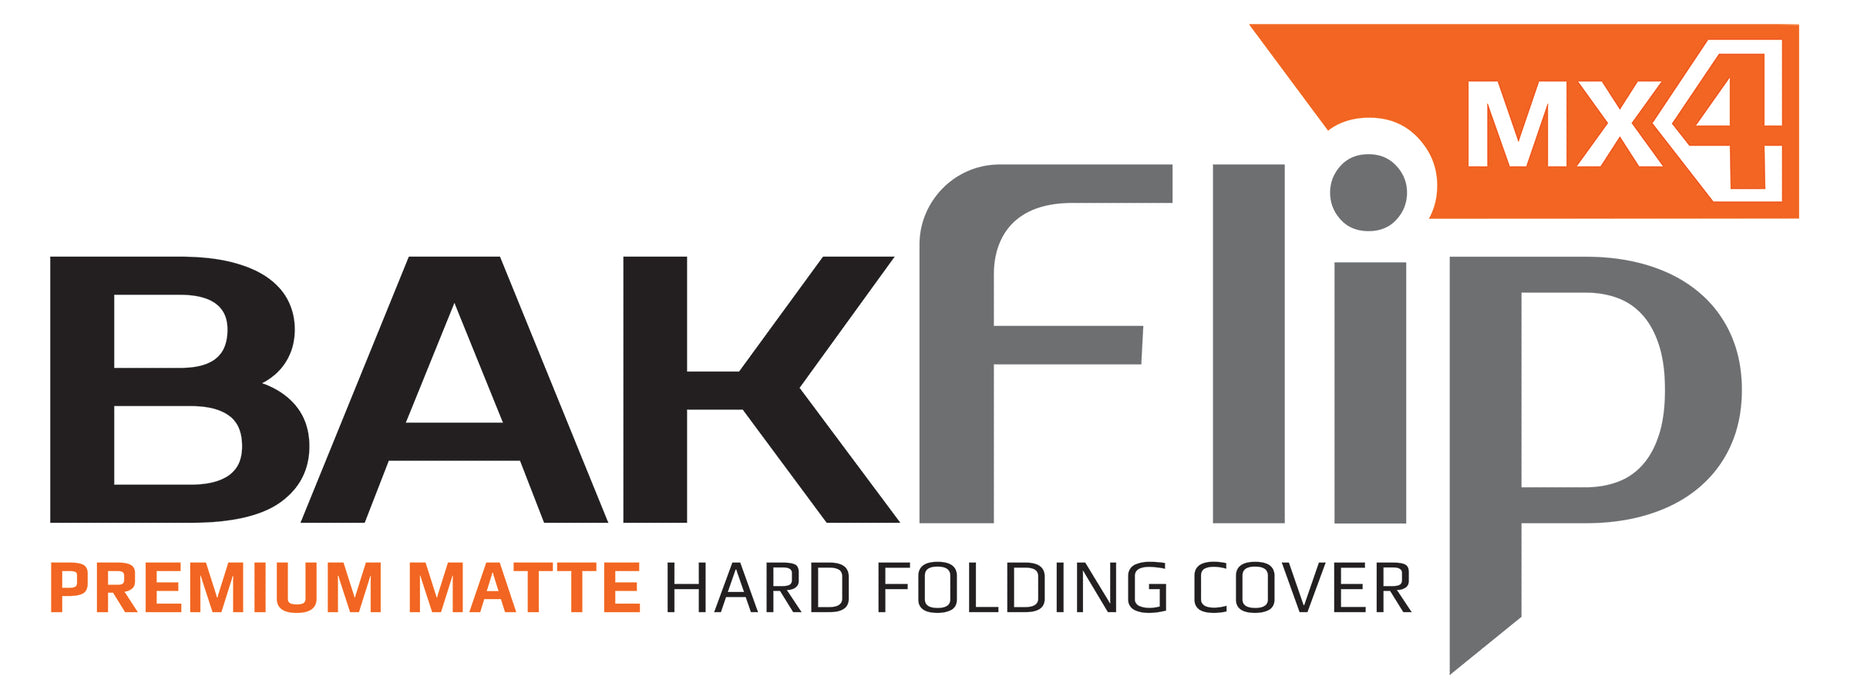 BAK BAKFlip MX4 Hard Folding Truck Bed Tonneau Cover MATTE FINISH Fits 2015-2018 GM Silverado,Sierra & 2019 Legacy/Limited 5.9ft Bed (2014 1500 Only, 2015-2019 1500,2500,3500) Model 448120